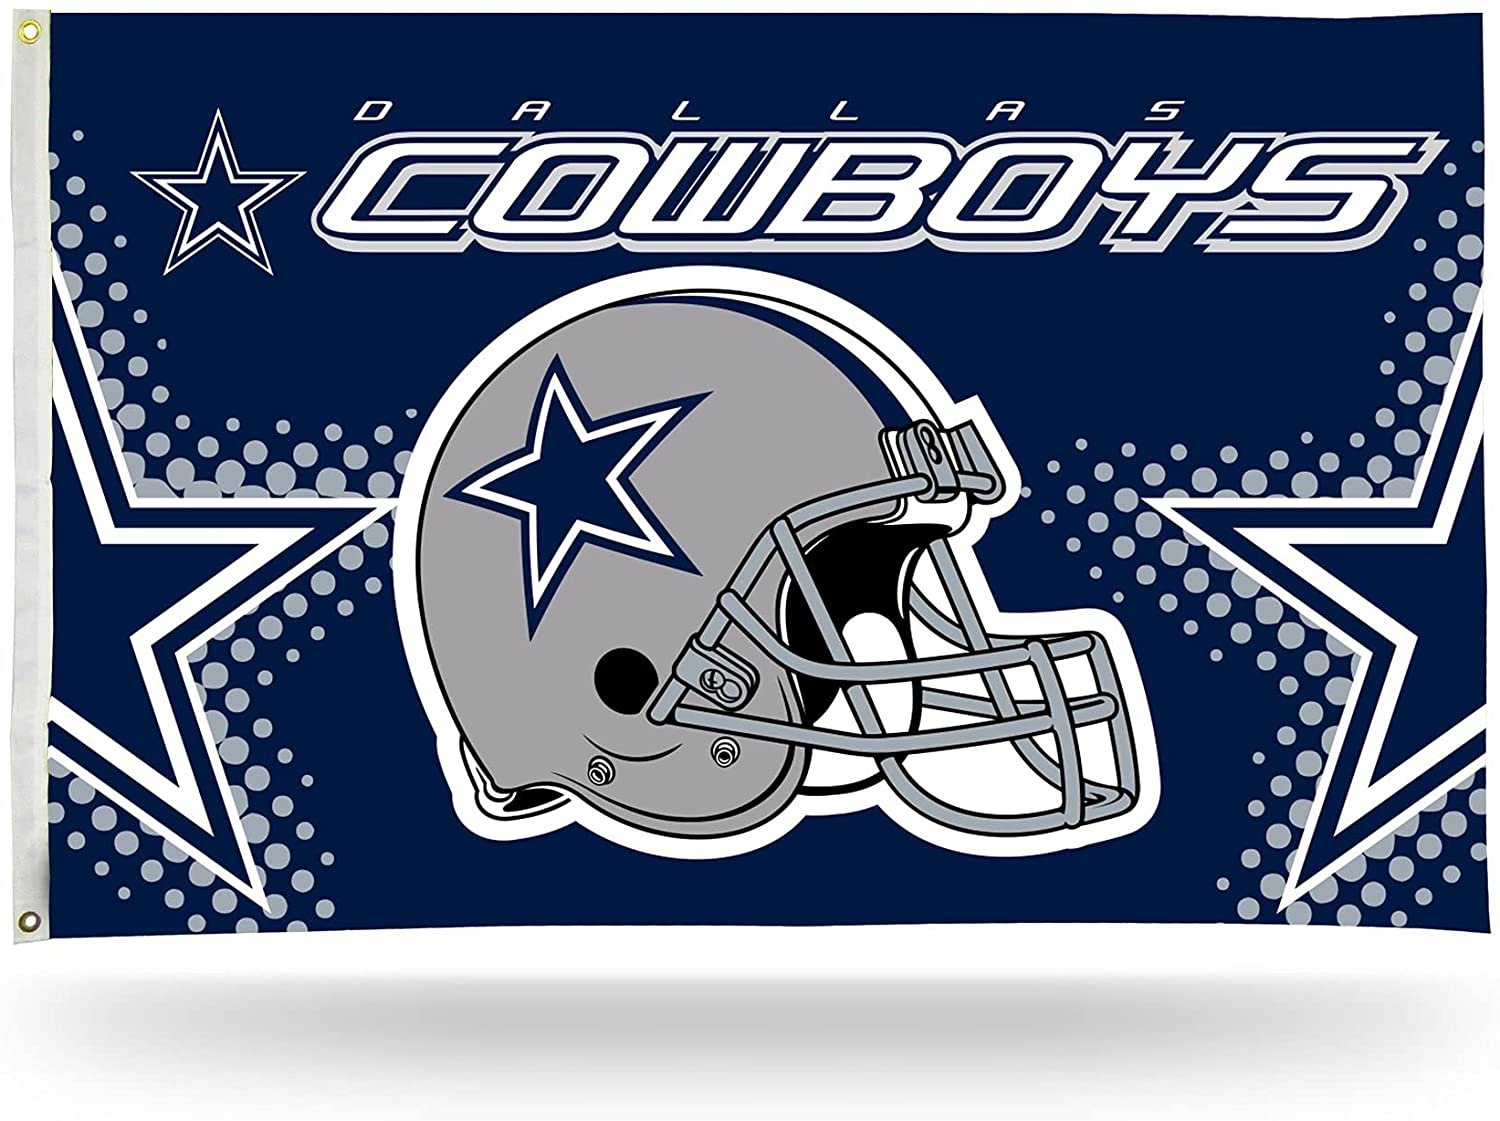 Dallas Cowboys Premium 3x5 Feet Flag Banner, Helmet Design, Metal Grommets, Outdoor Use, Single Sided